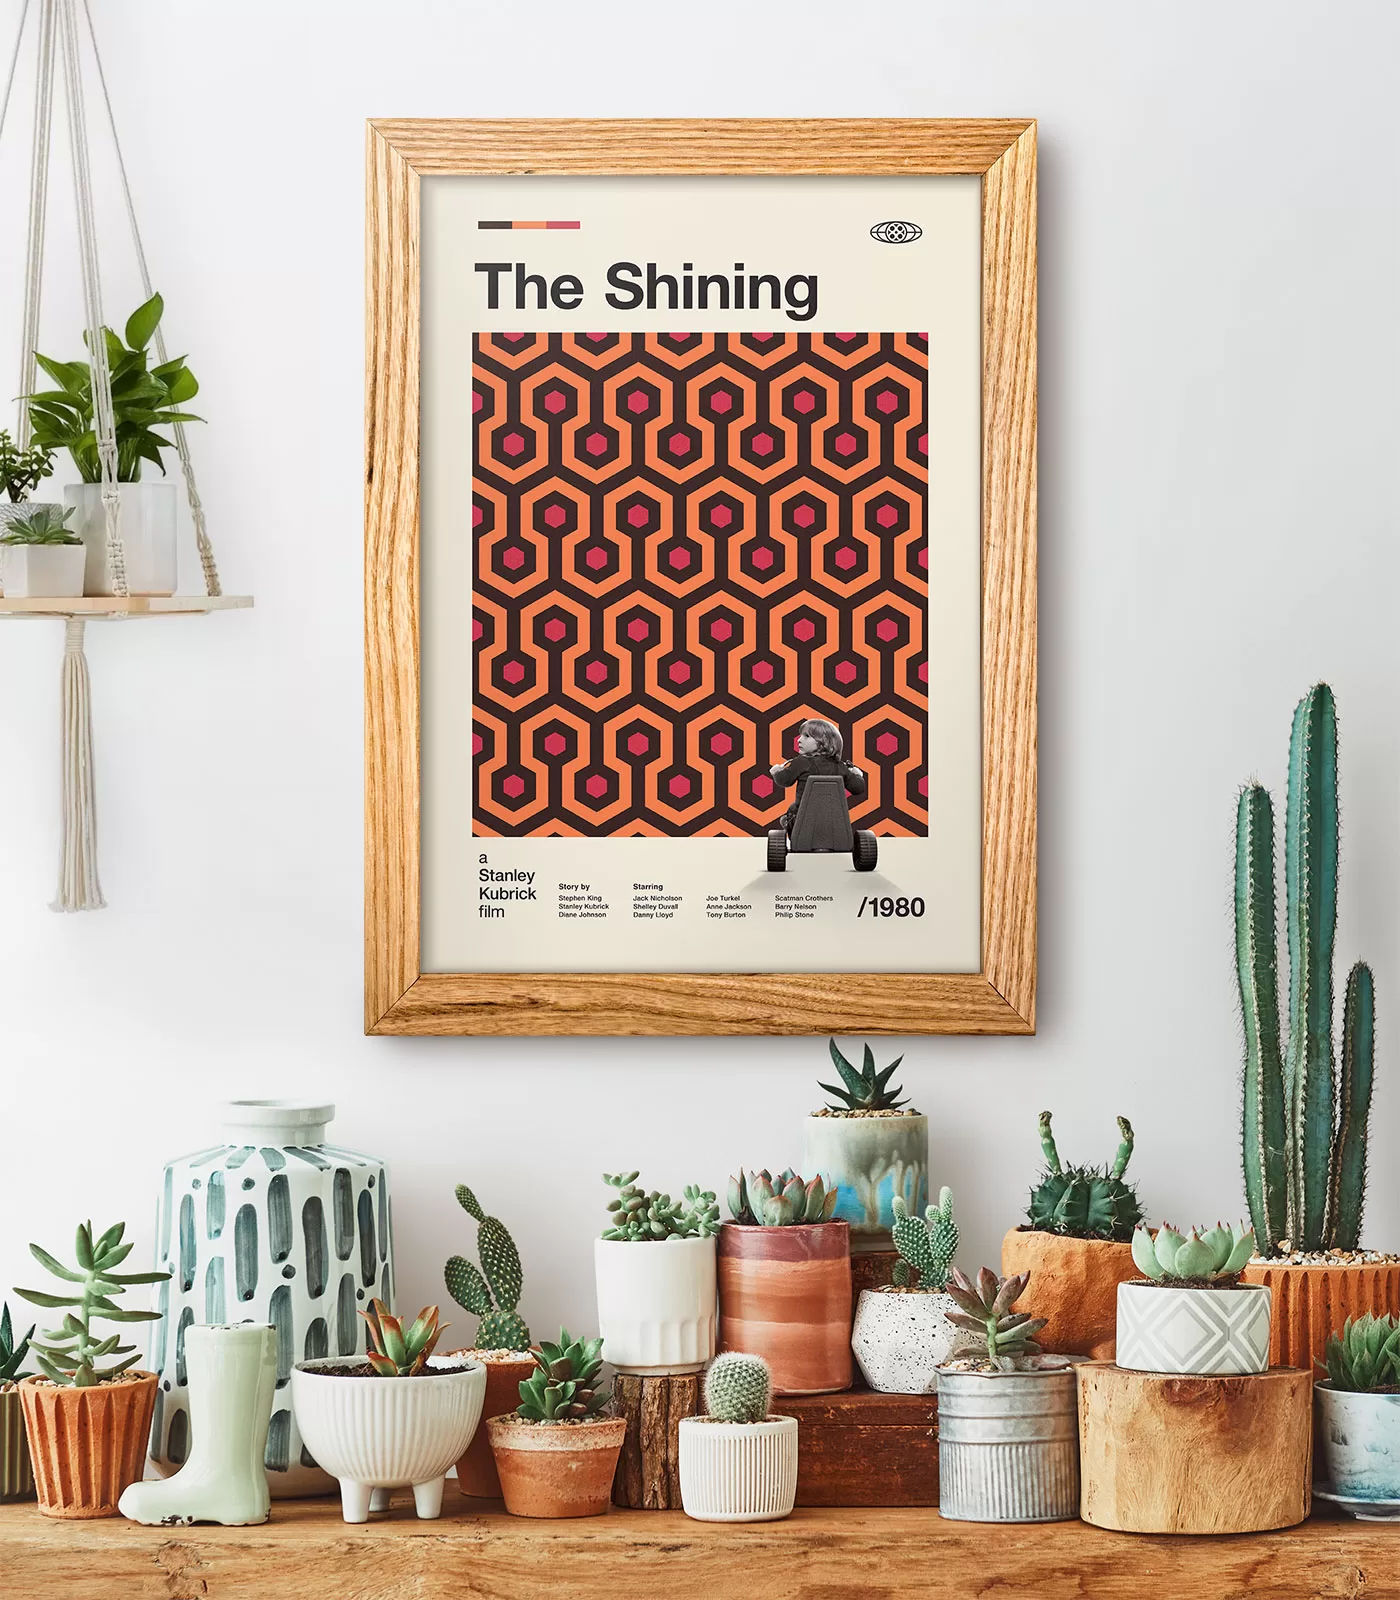 The Shining' Retro Movie Poster